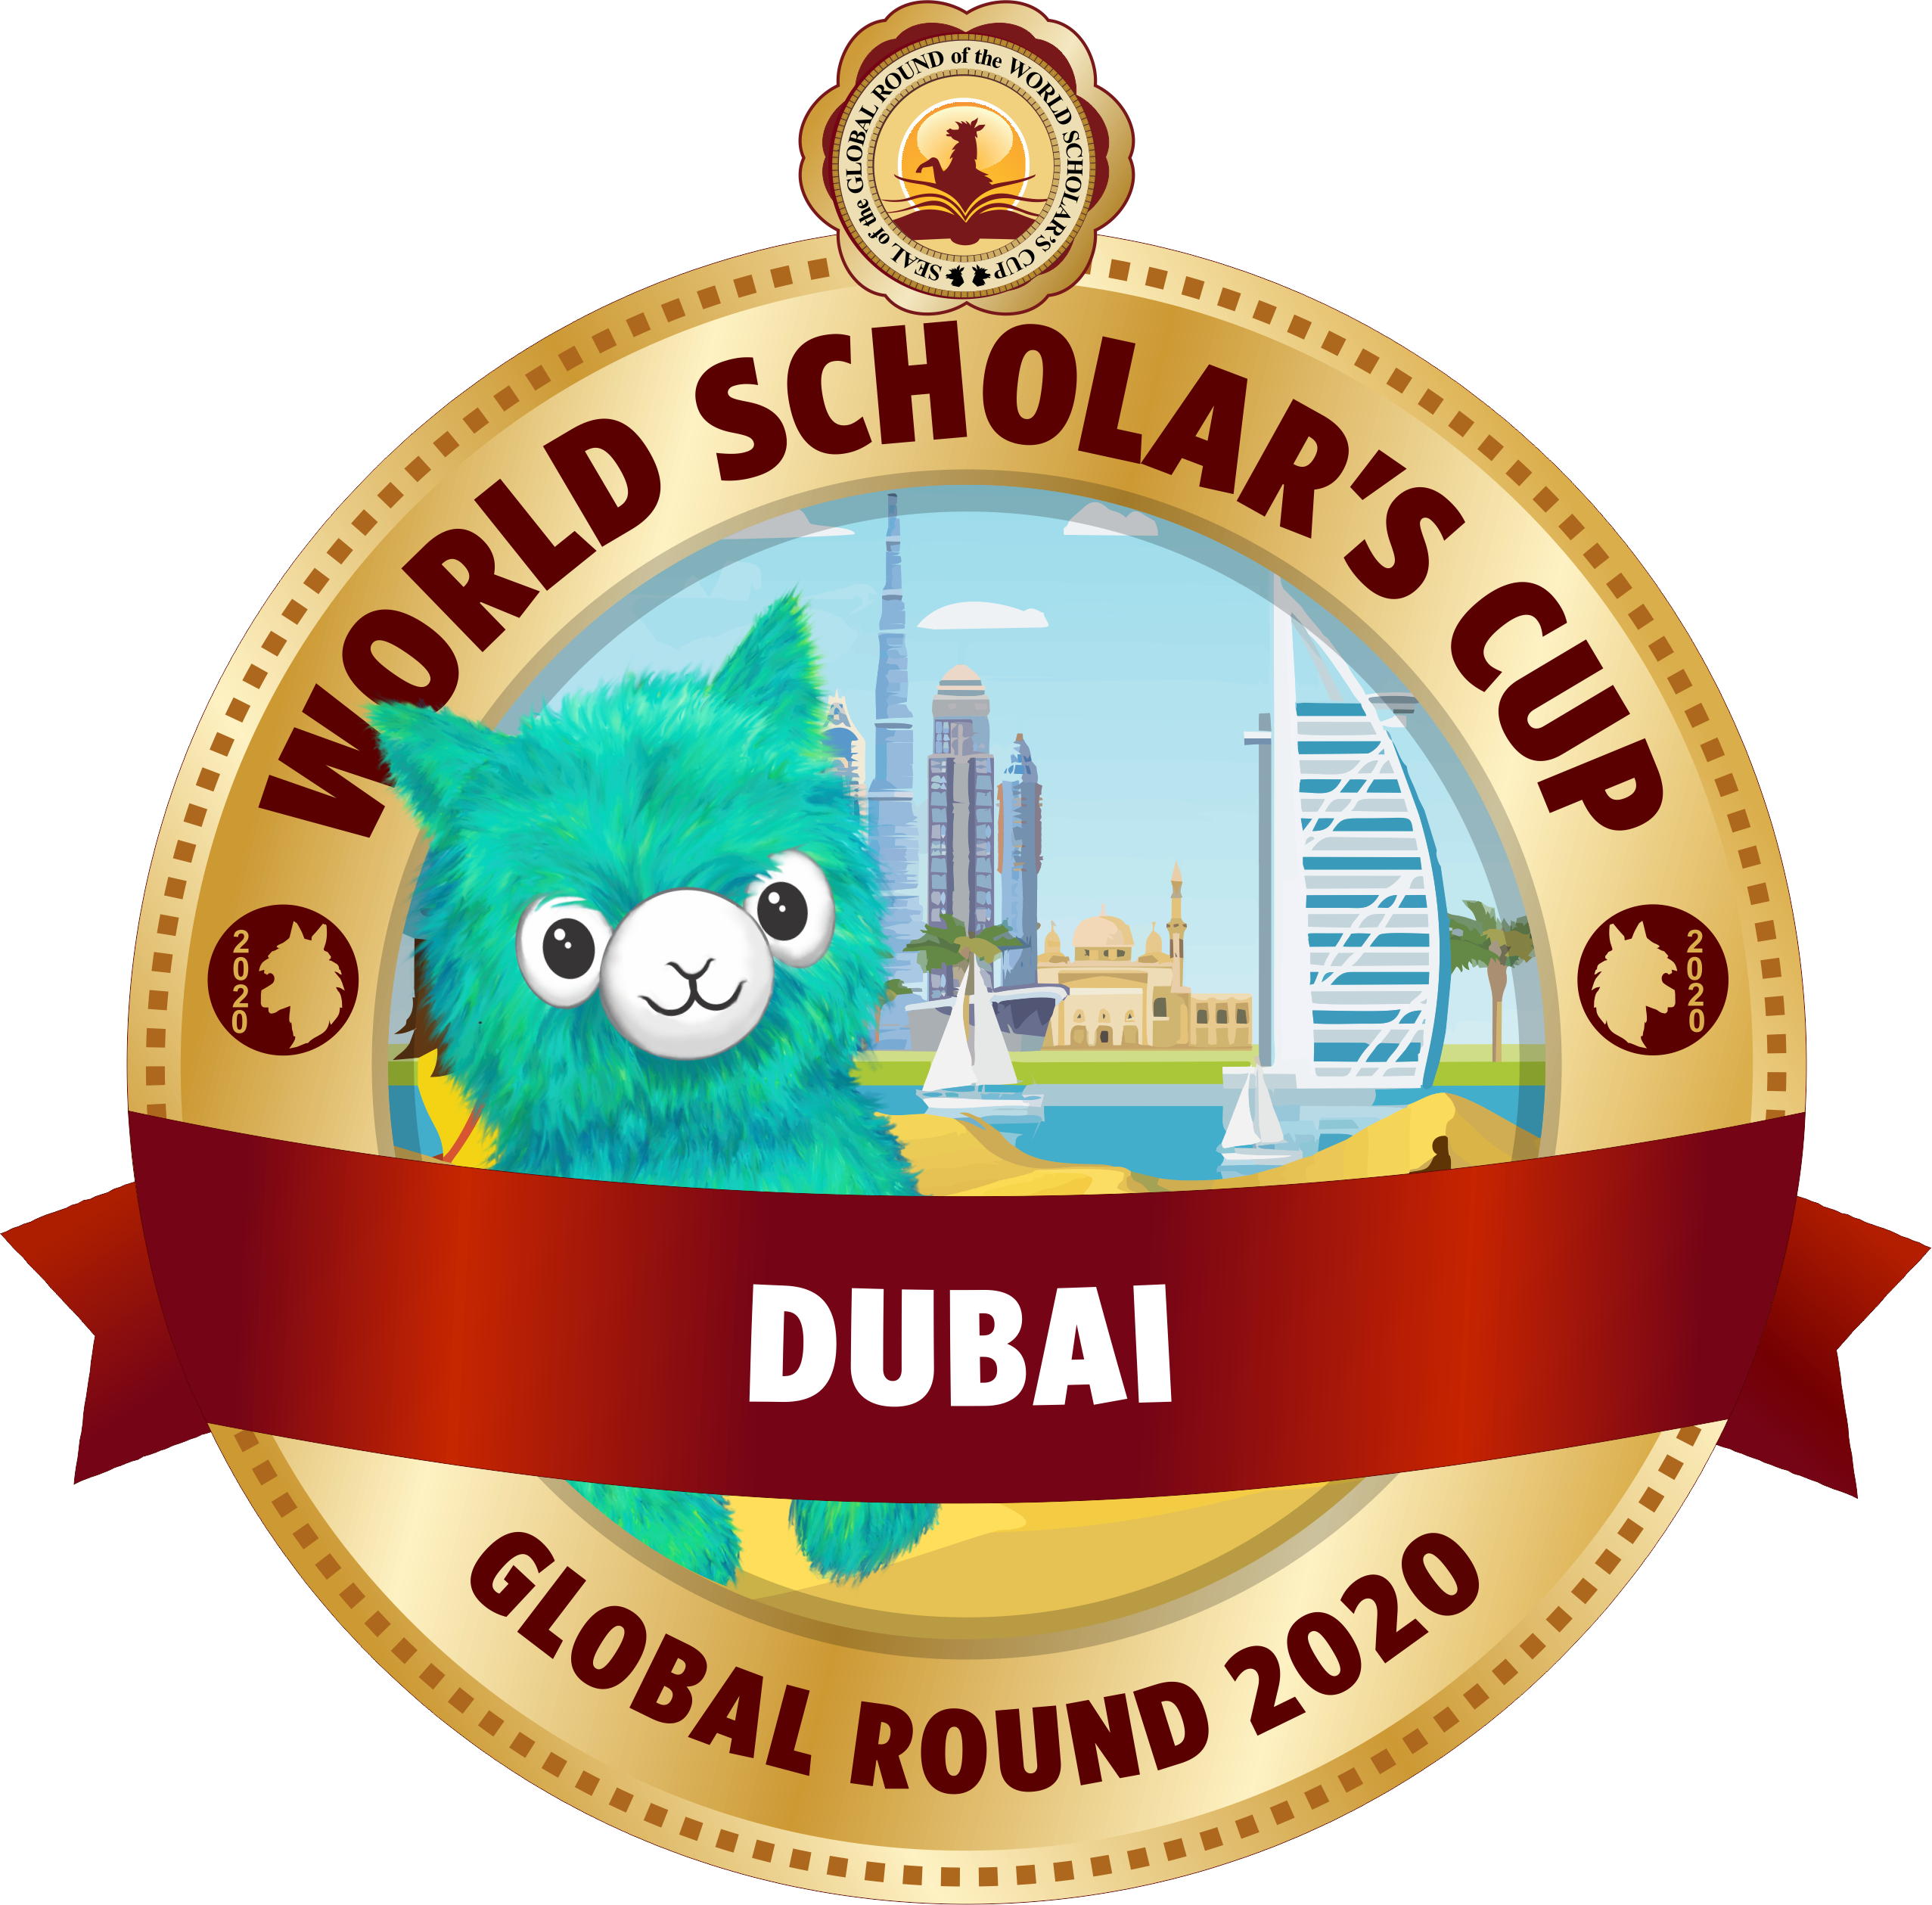 World Scholars Cup Dubai Global Round2020 Badge